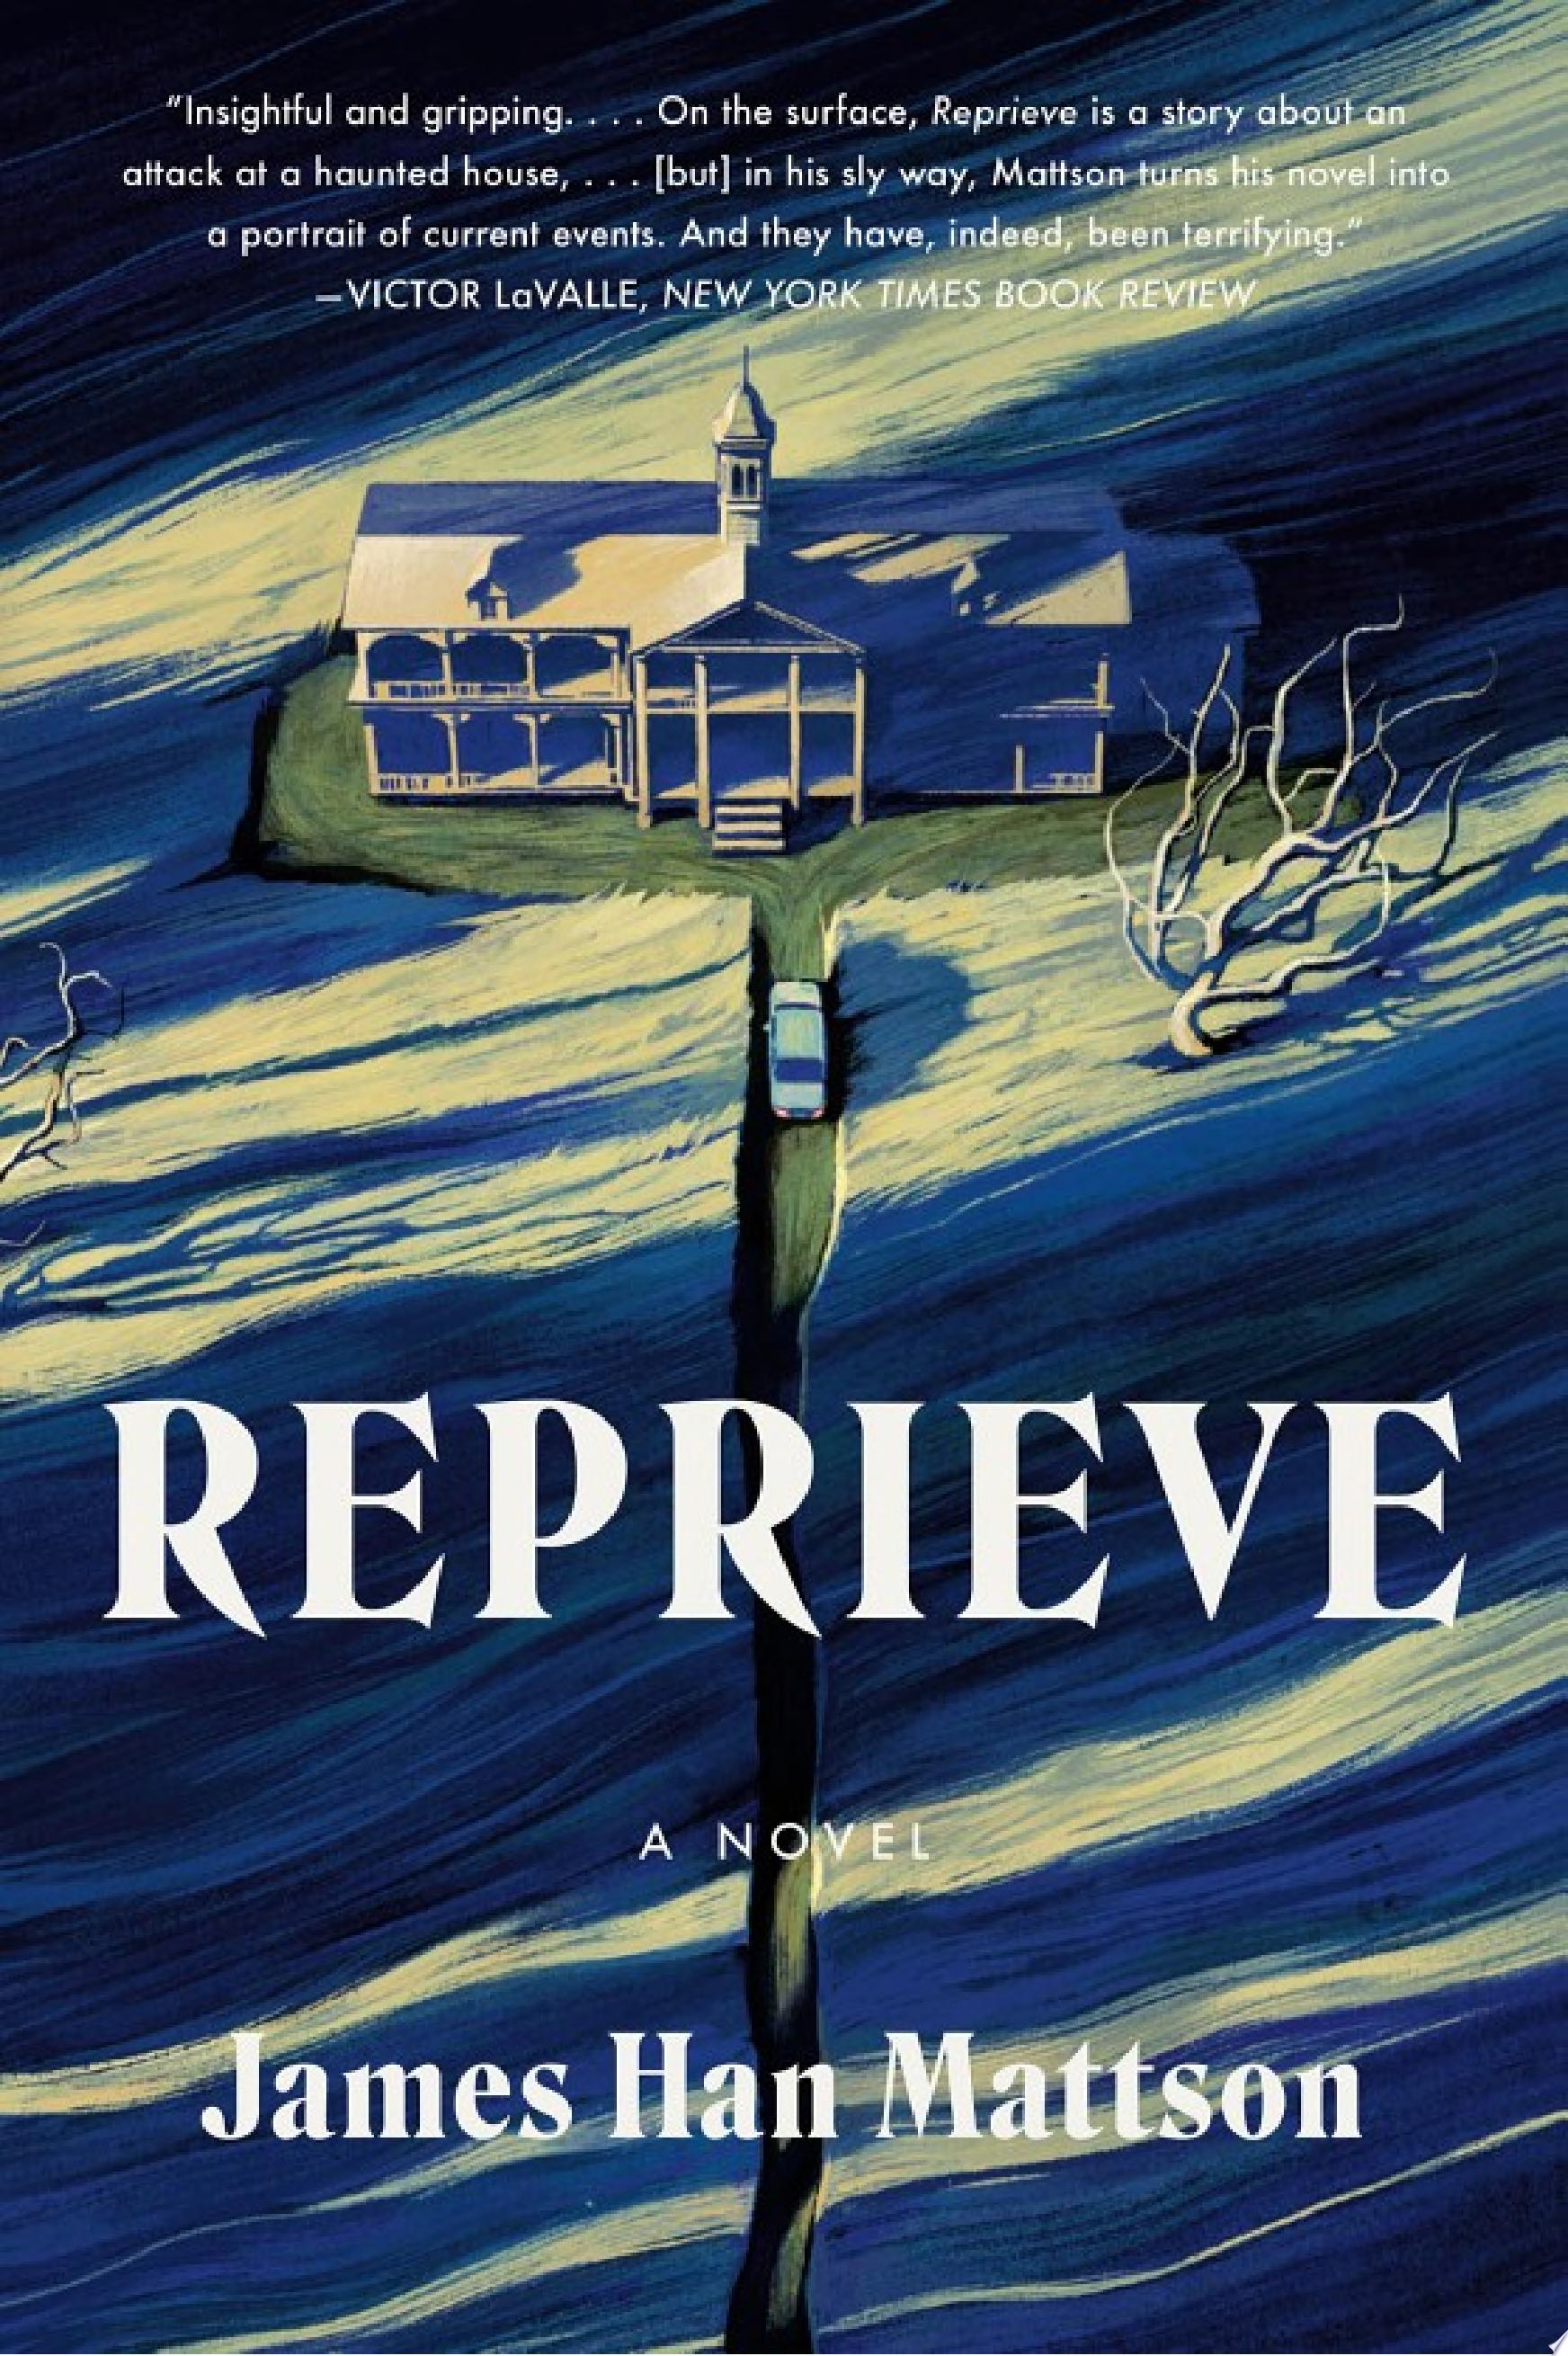 Image for "Reprieve"